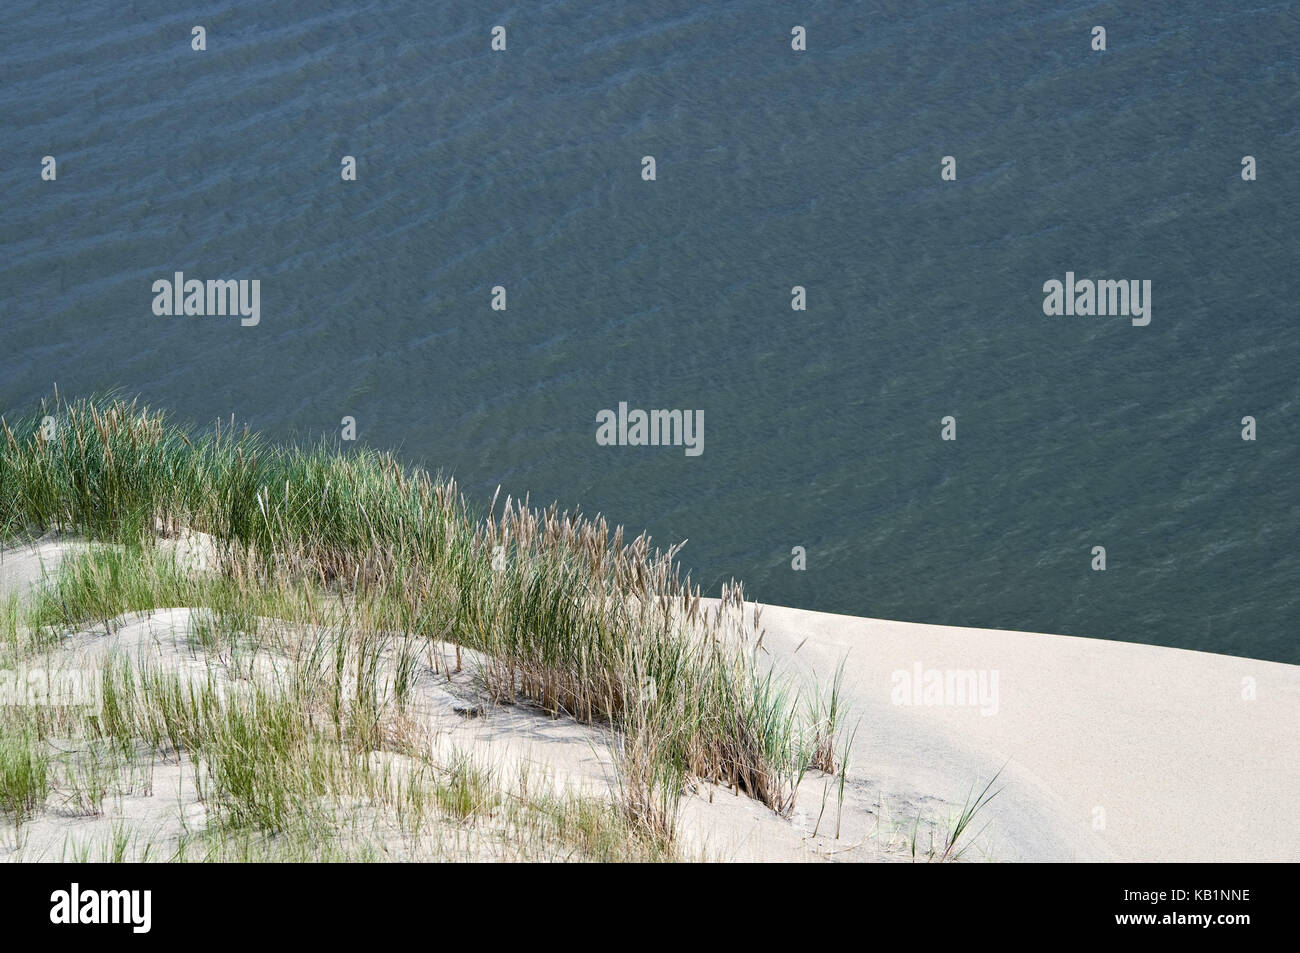 Lithuania, Nida, health resort broad bay bar, coast, Sand dune, grass, Stock Photo